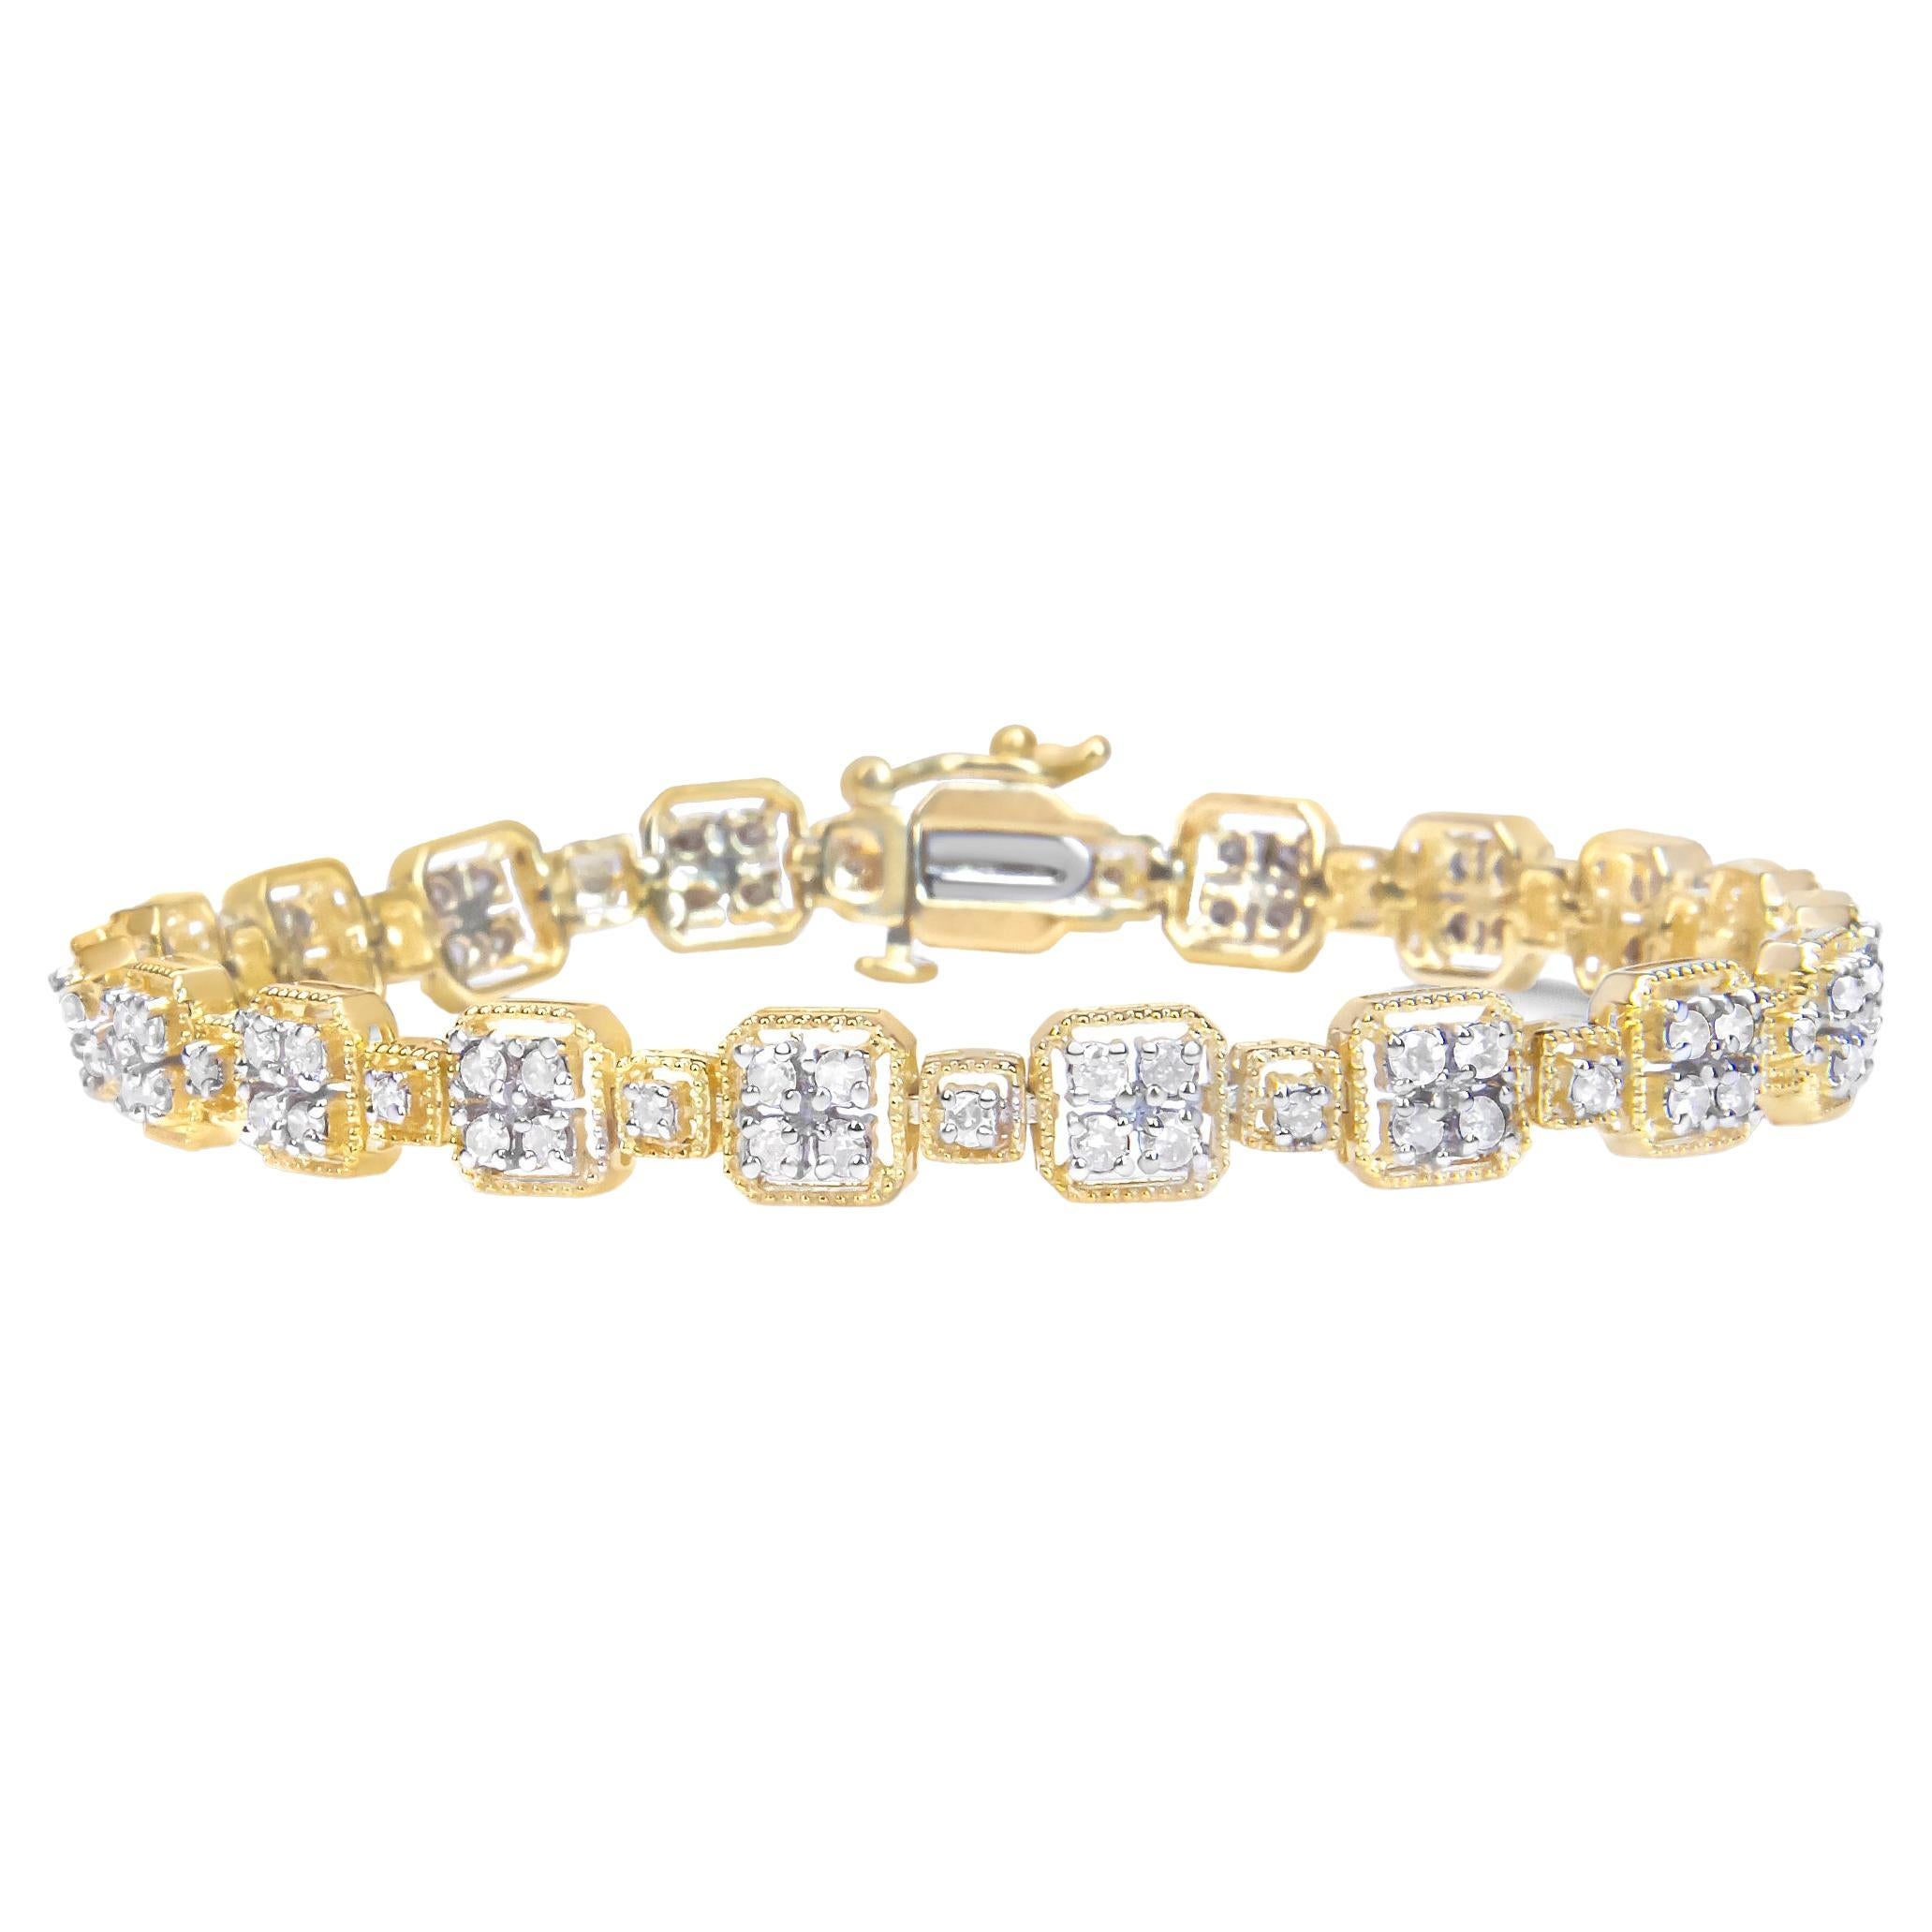 10K Yellow Gold 2.0 Carat Diamond Square Link Bracelet For Sale